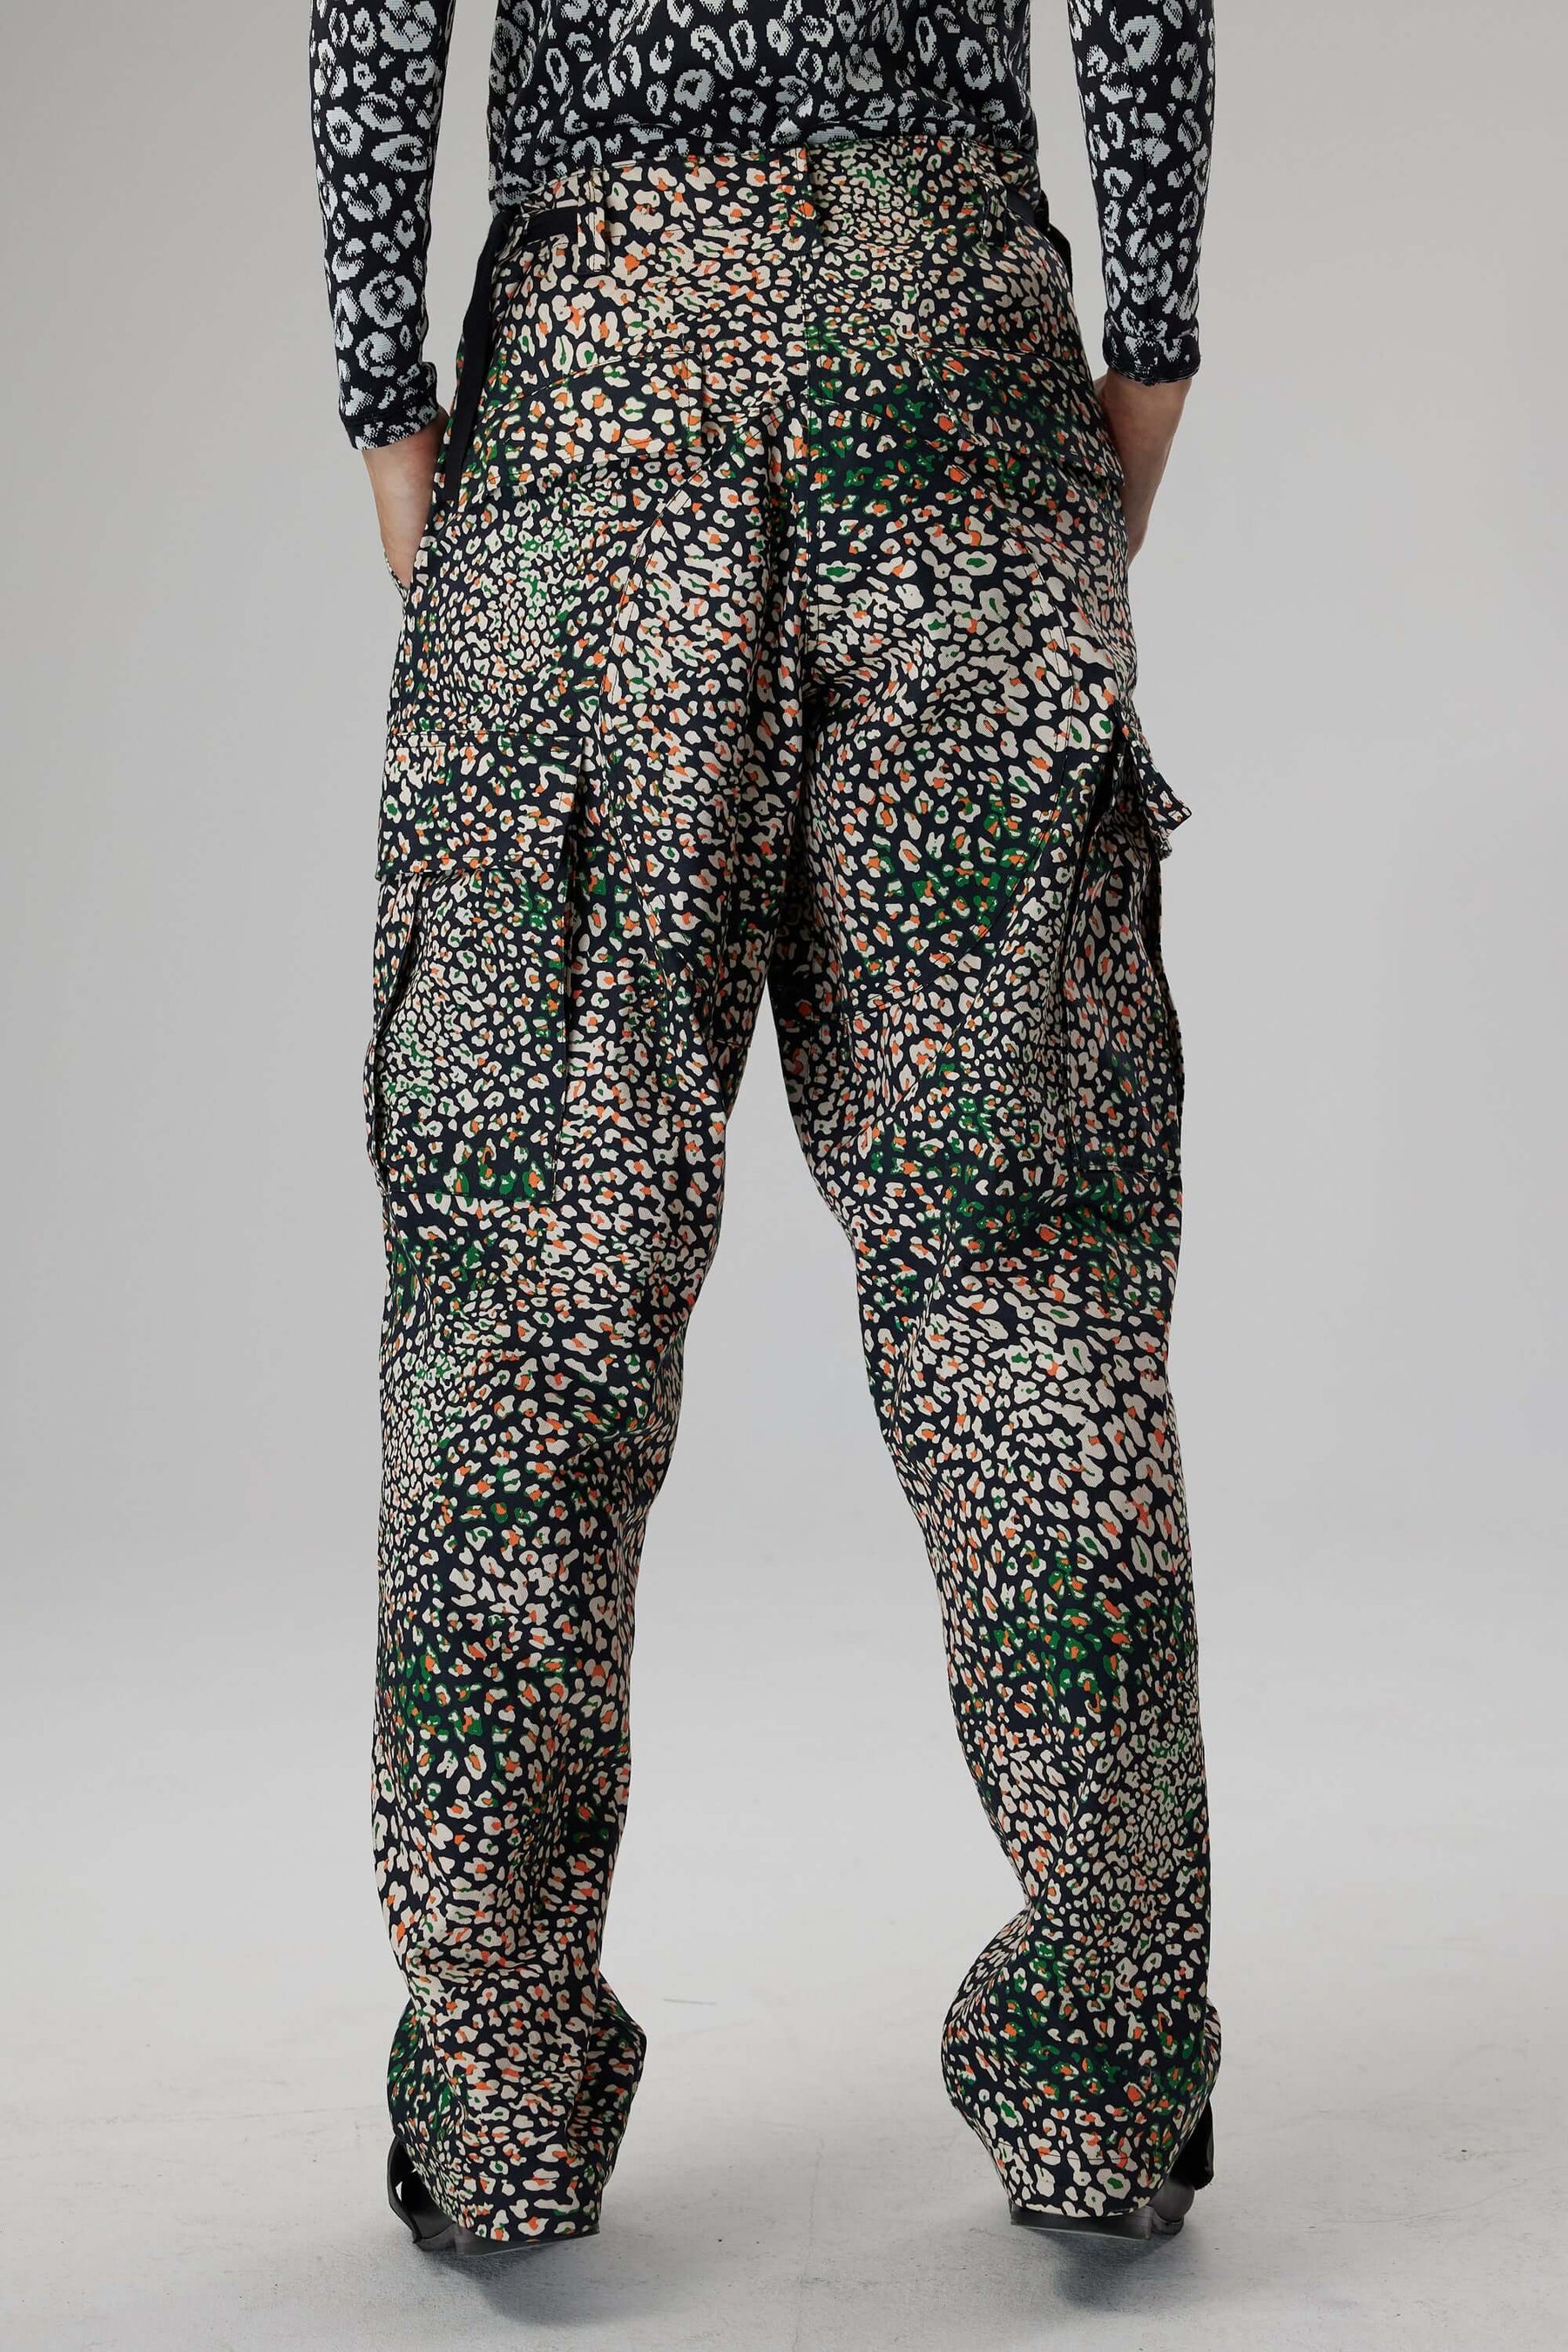 Santino pants in wild Leopard print